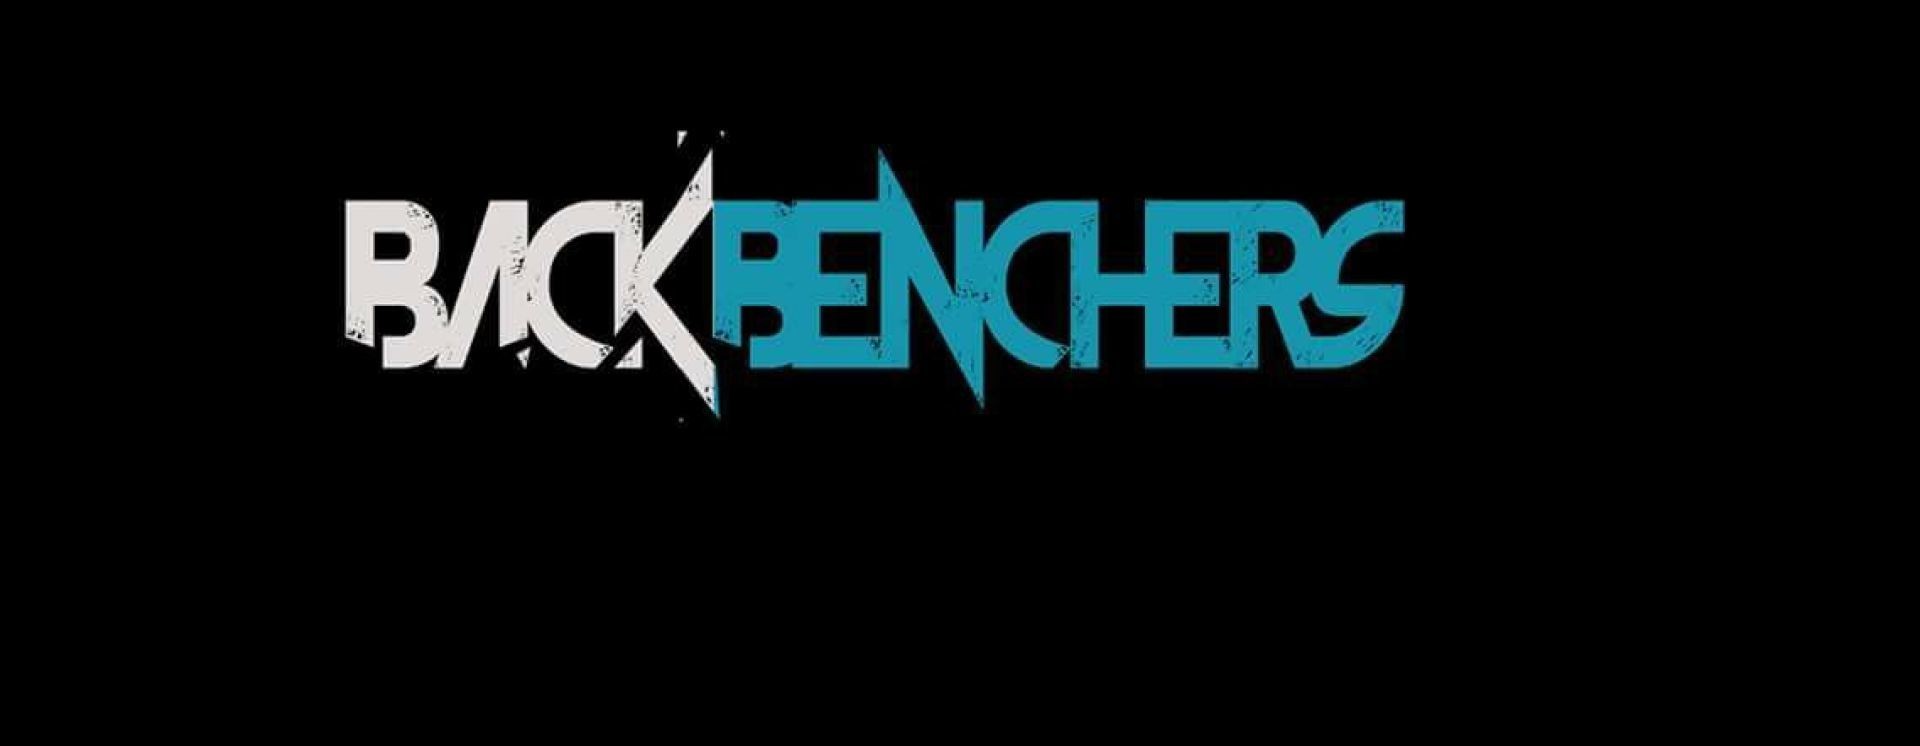 BACKBENCHERS | ReverbNation